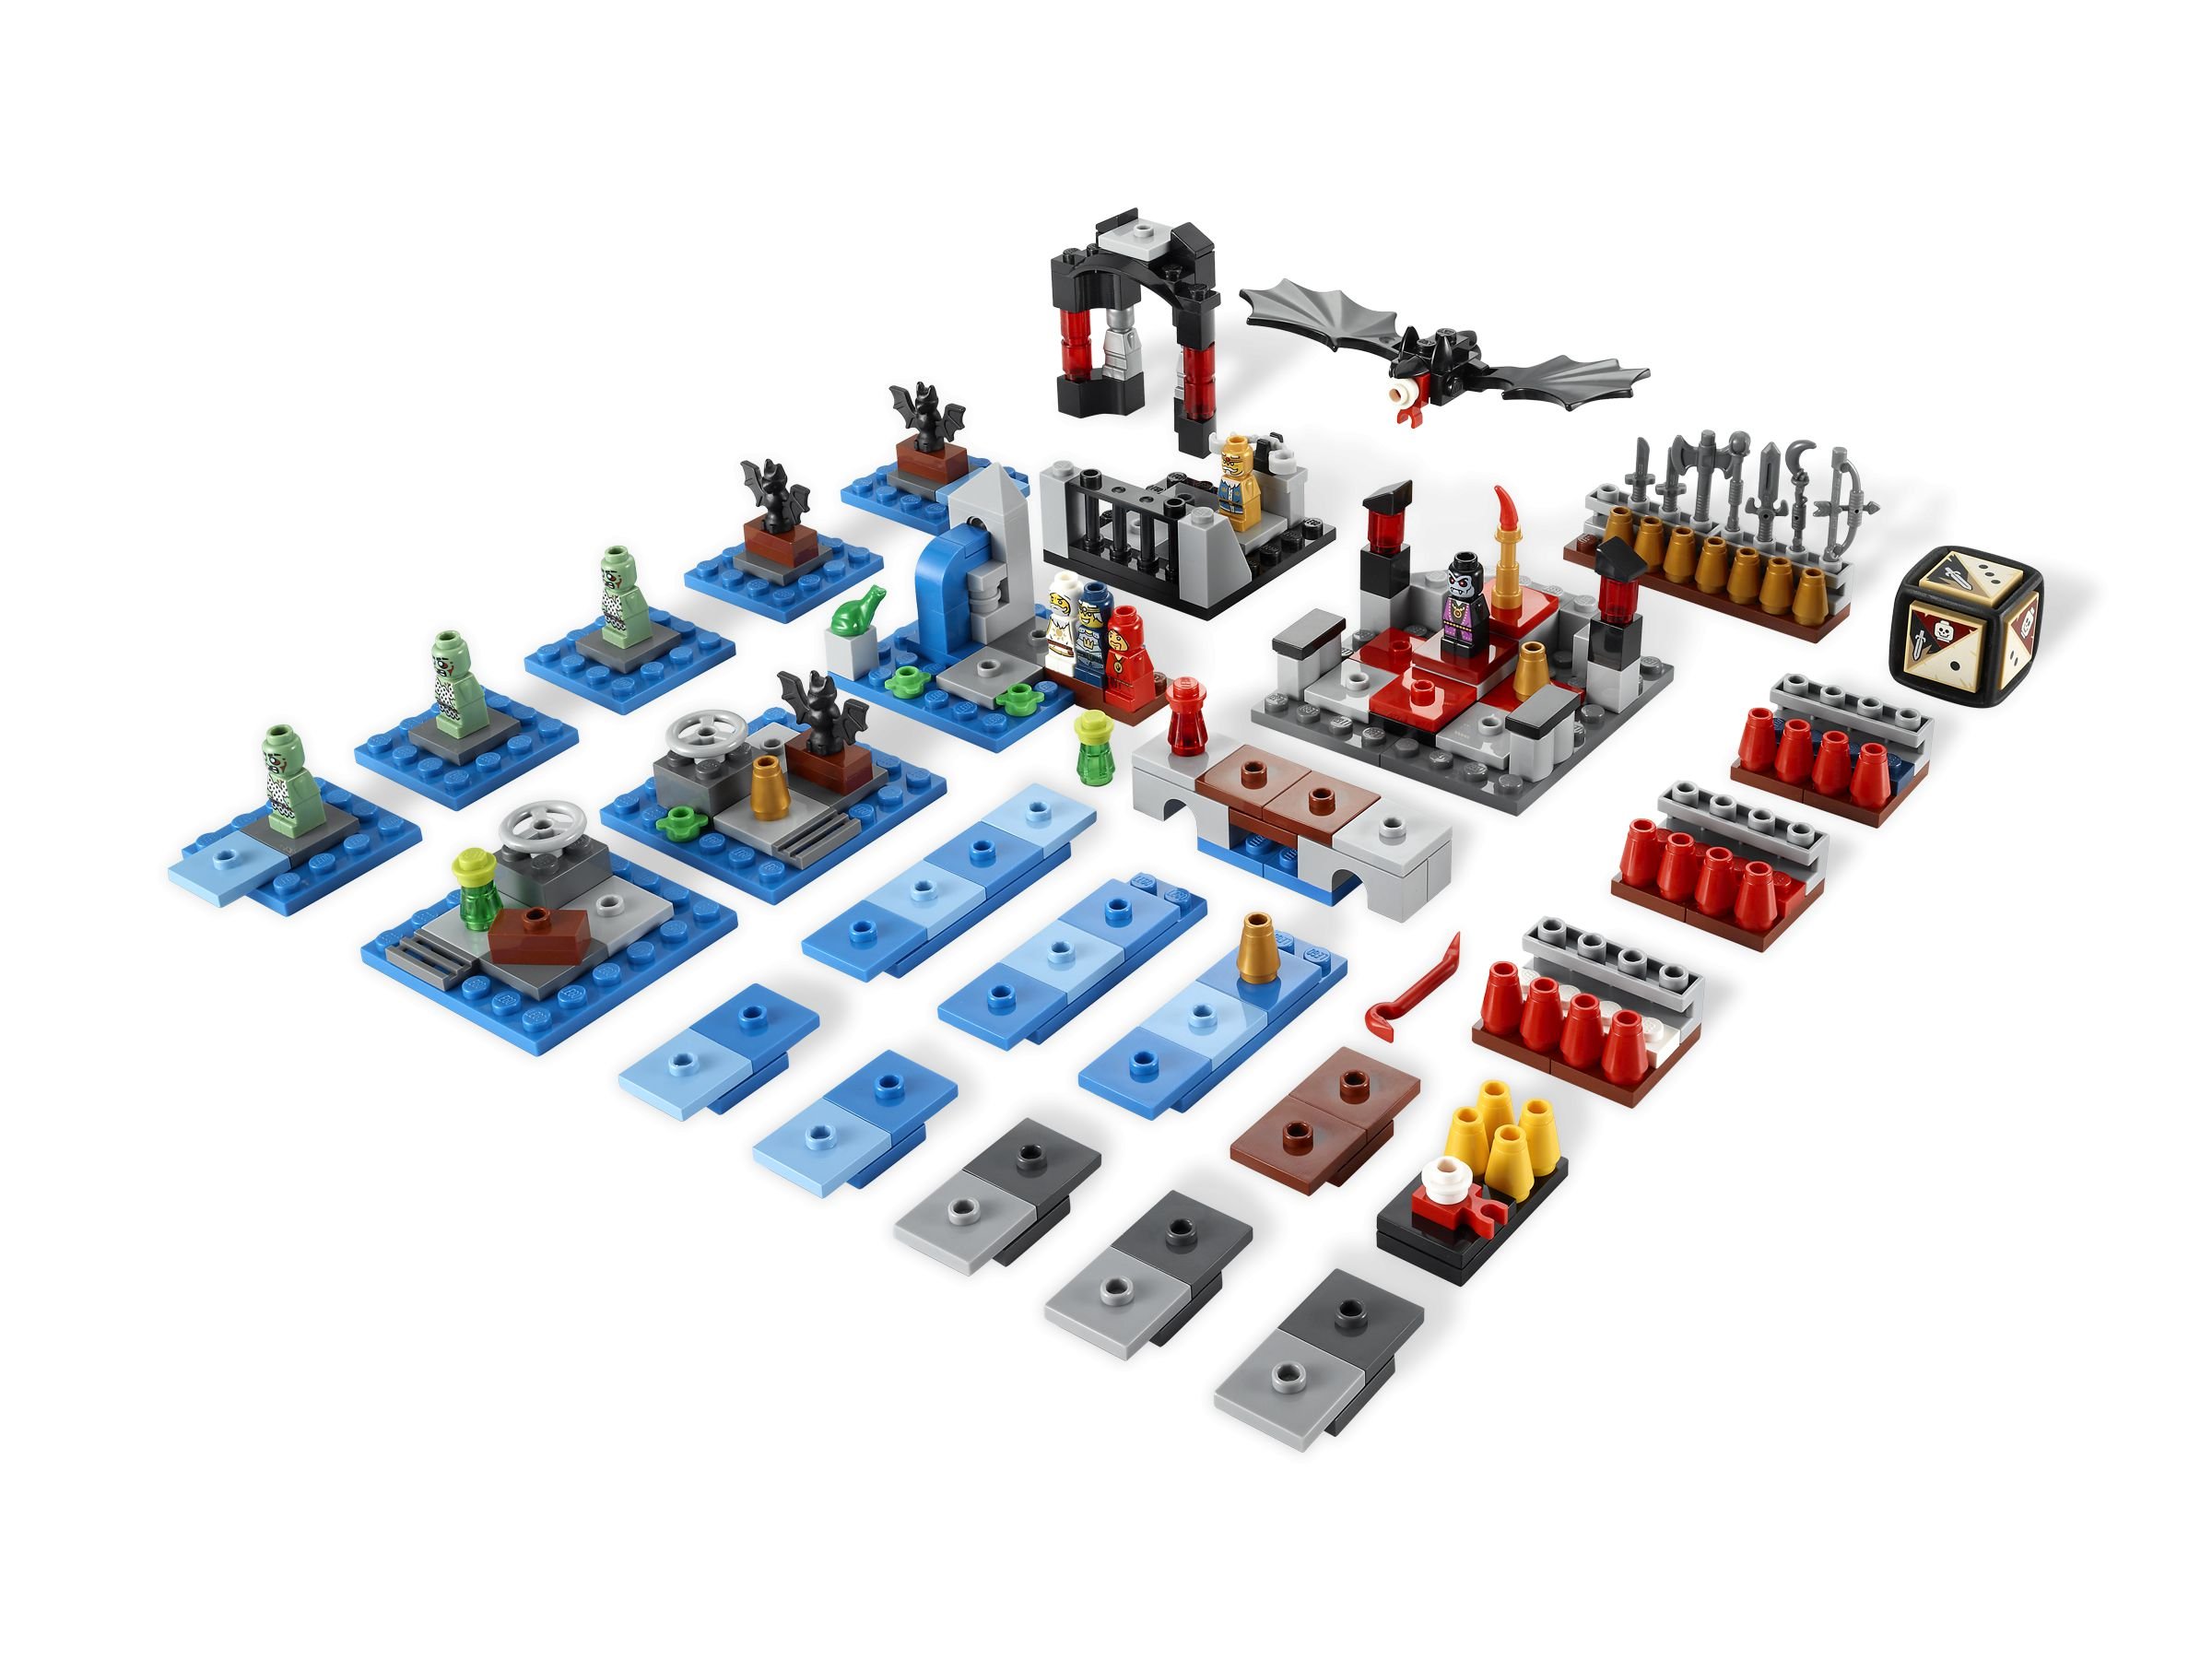 LEGO Games 3874 HEROICA Ilrion LEGO_3874_alt2.jpg